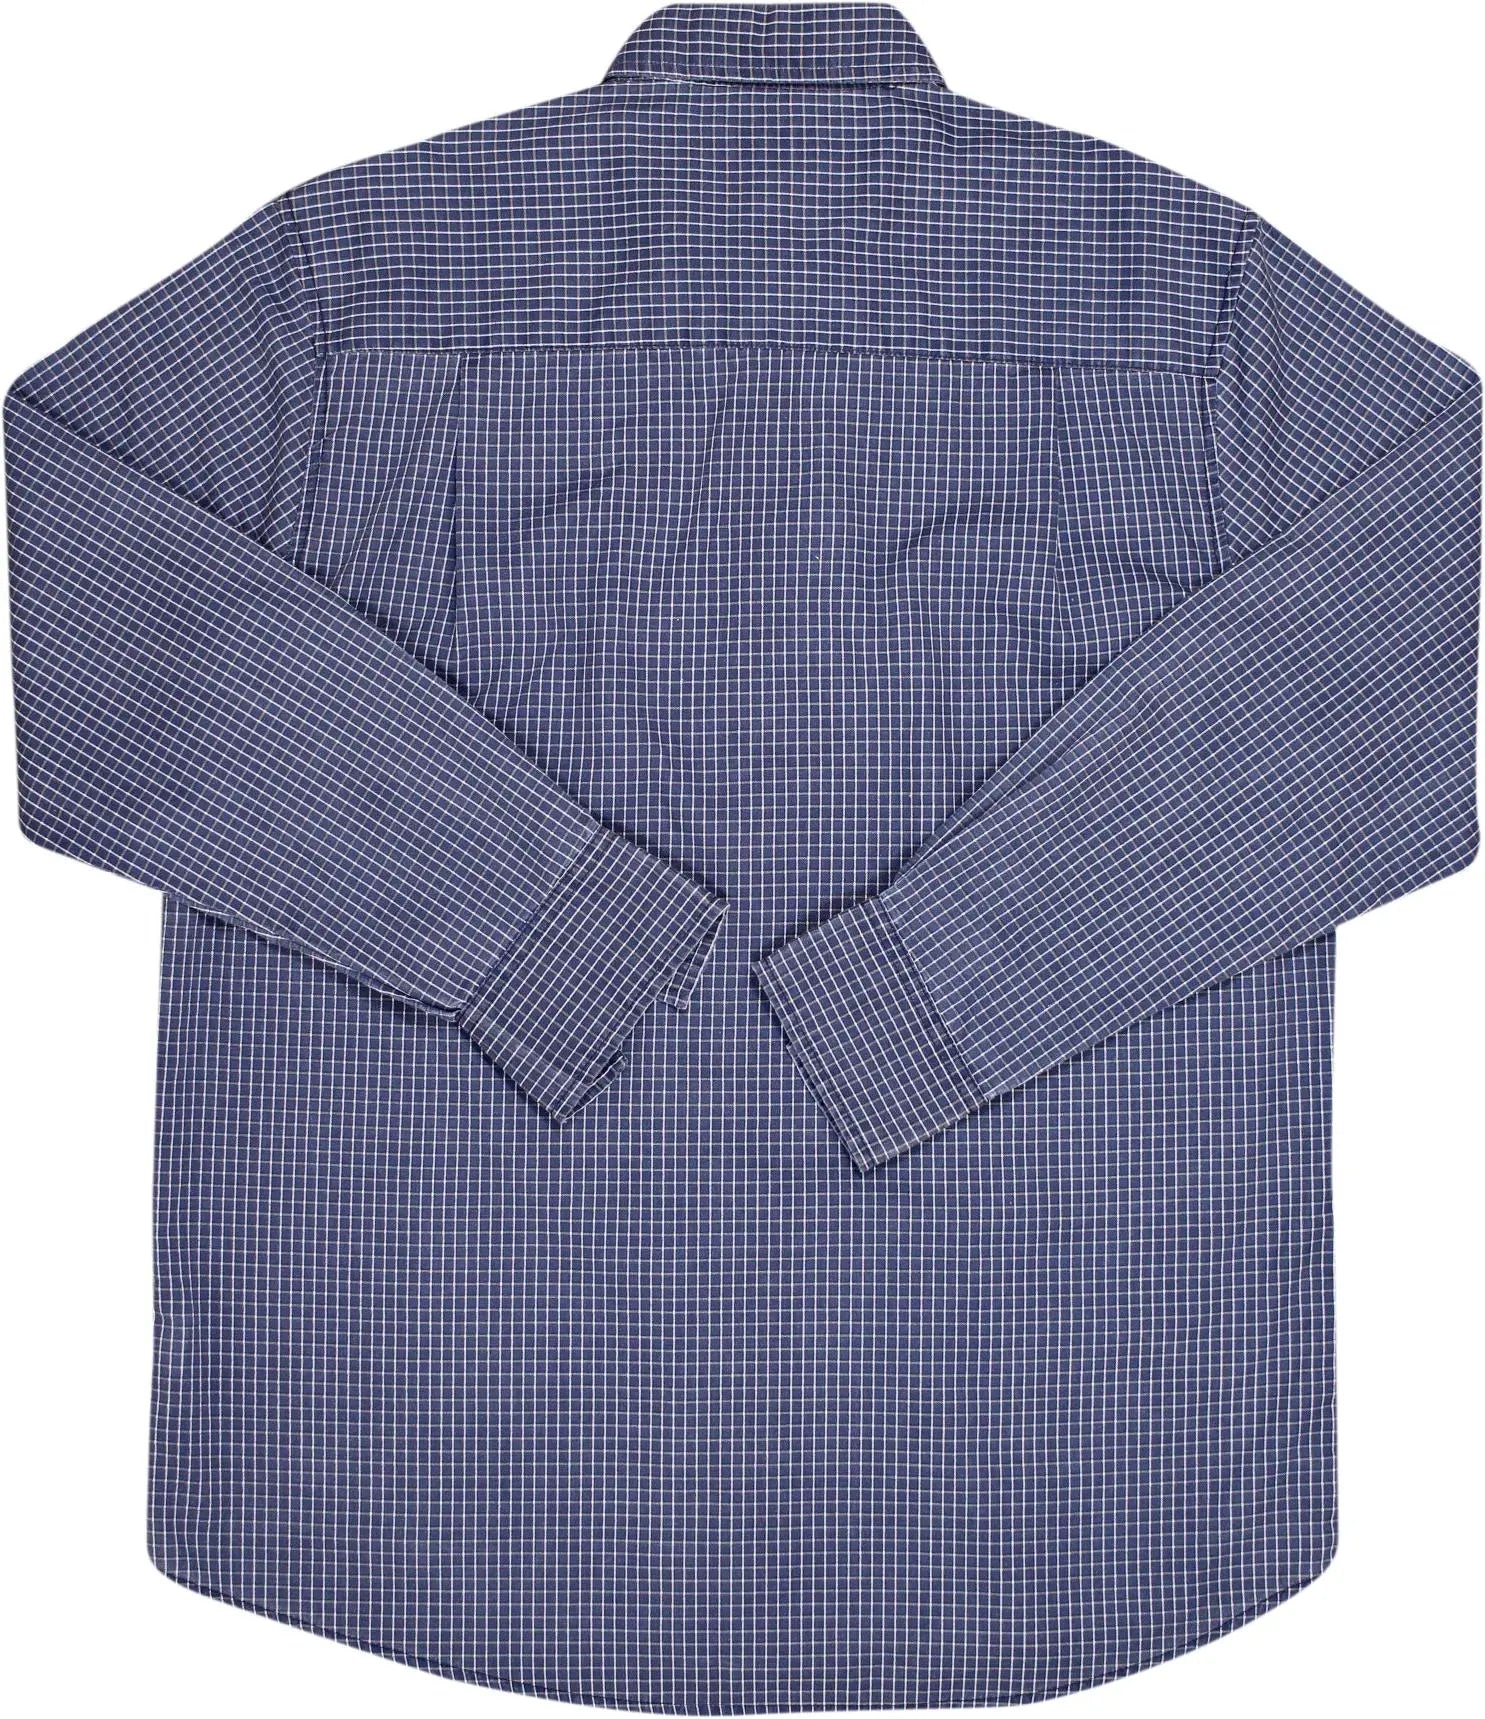 Portonova - BLUE2474- ThriftTale.com - Vintage and second handclothing